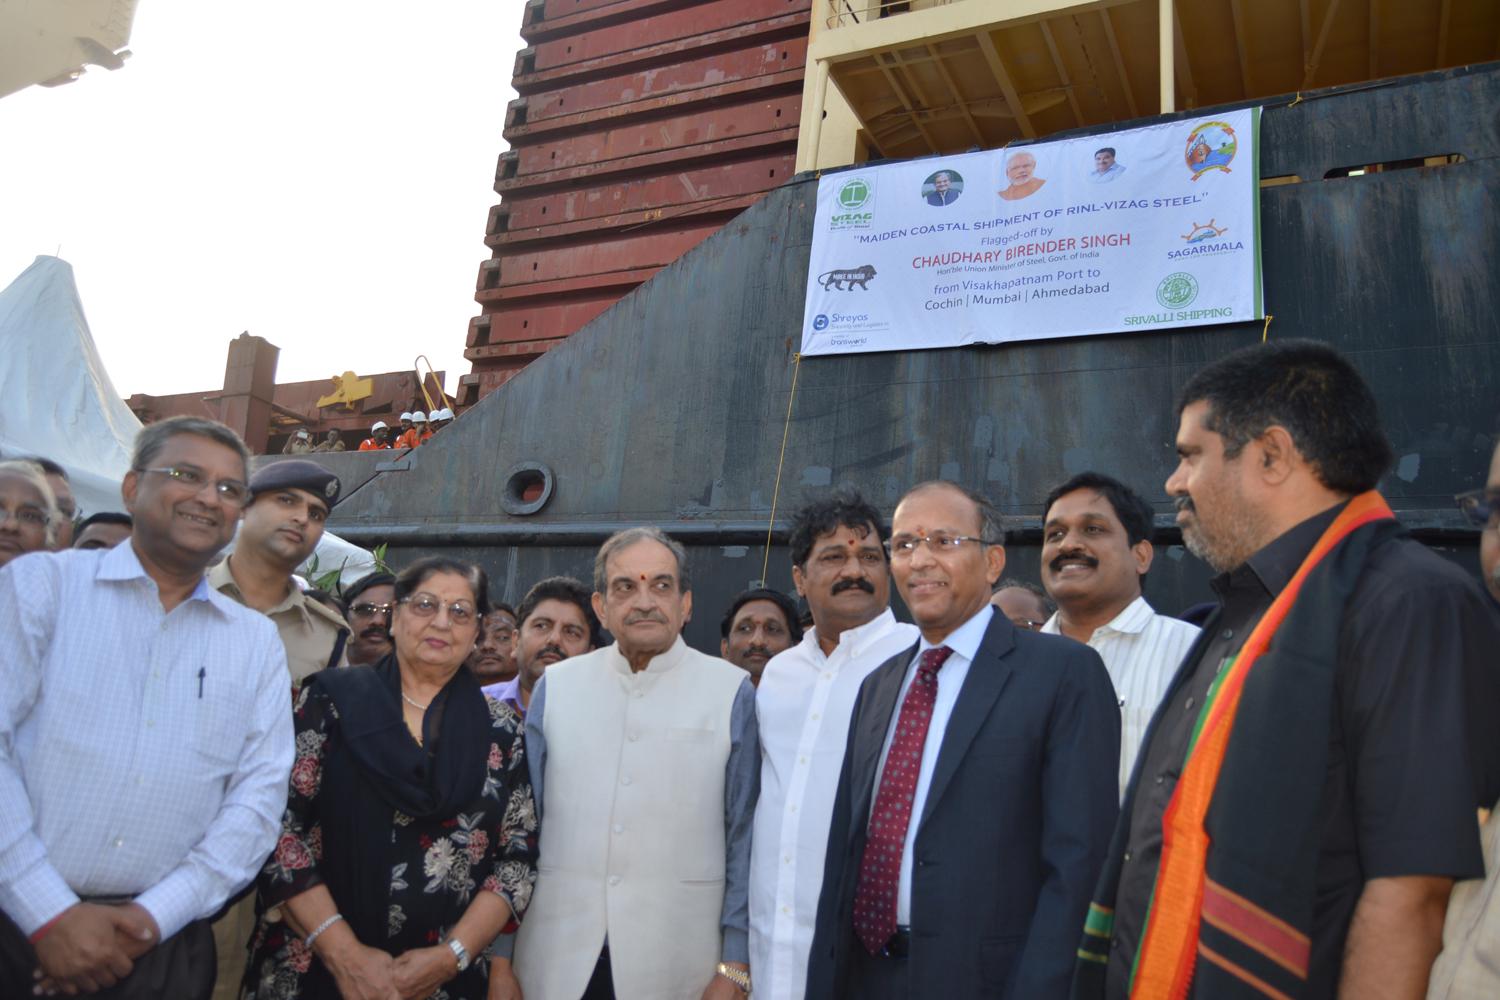 Union Steel Minister flags-off maiden Coastal Shipment of  RINL-Vizag Steel at Visakhapatnam